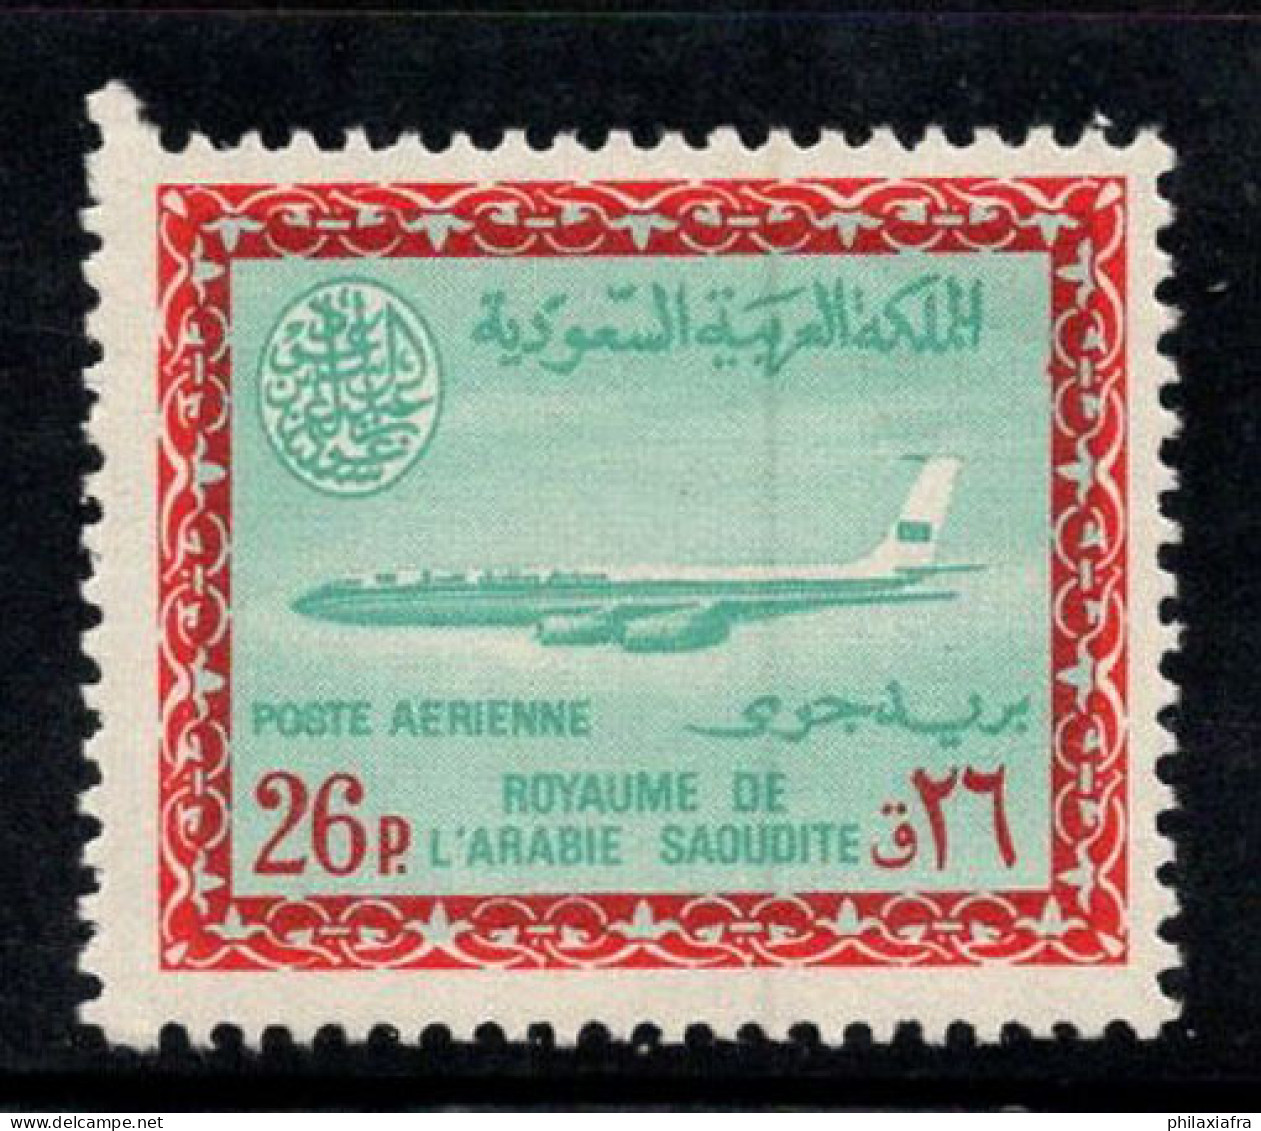 Arabie Saoudite 1965-72 Mi. 263 Neuf ** 100% Poste Aérienne 26 Pia, Boeing 720 B - Saudi Arabia